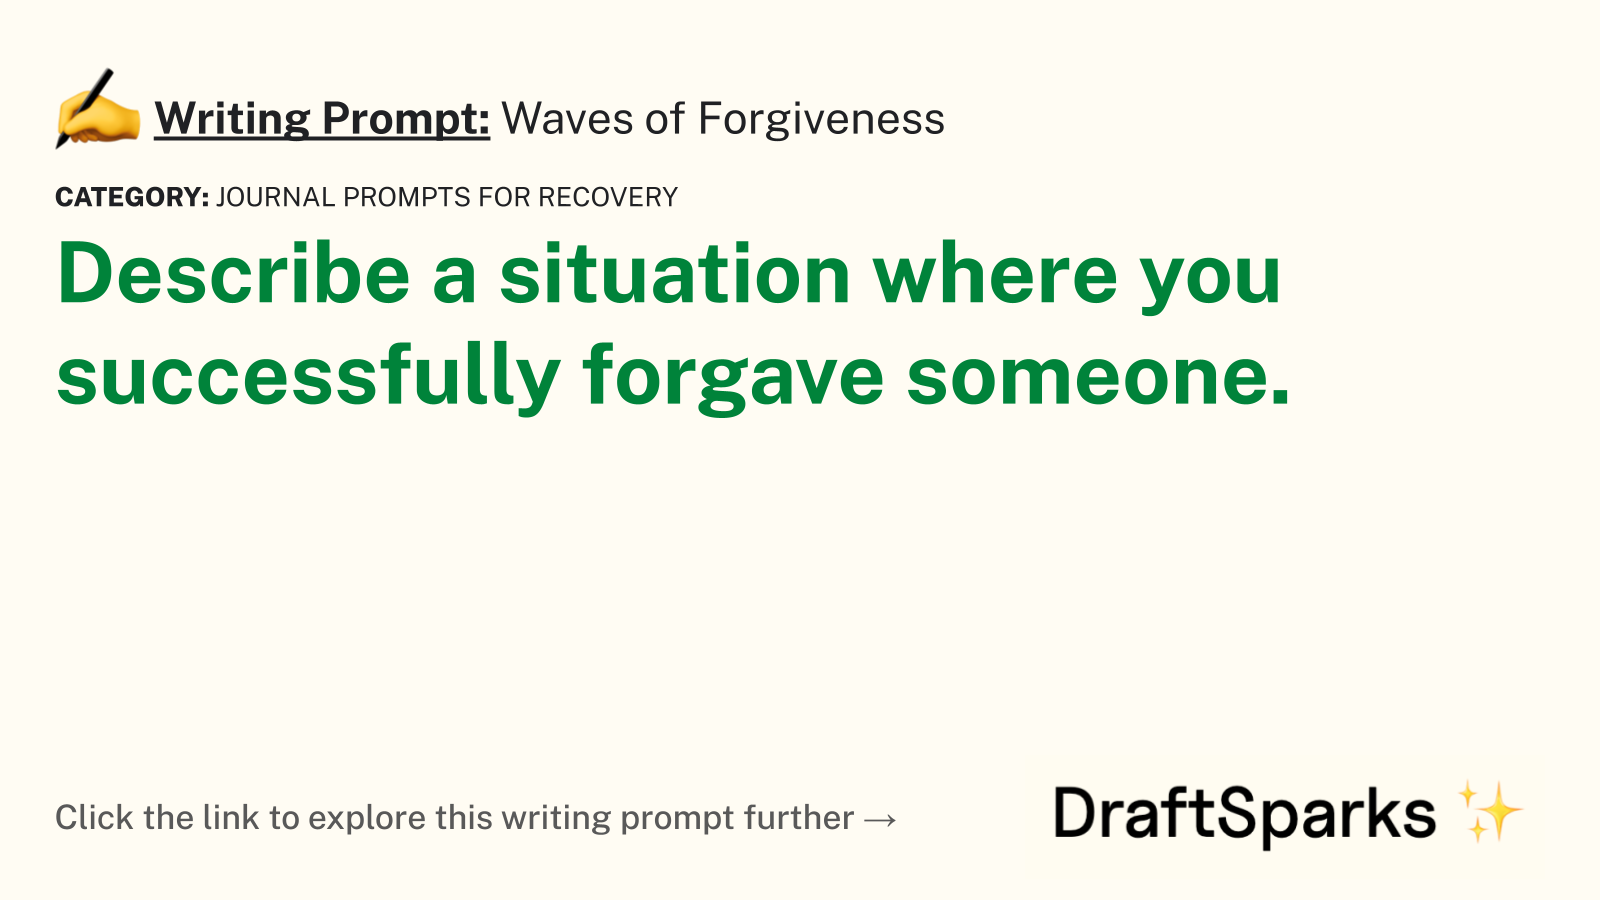 Waves of Forgiveness